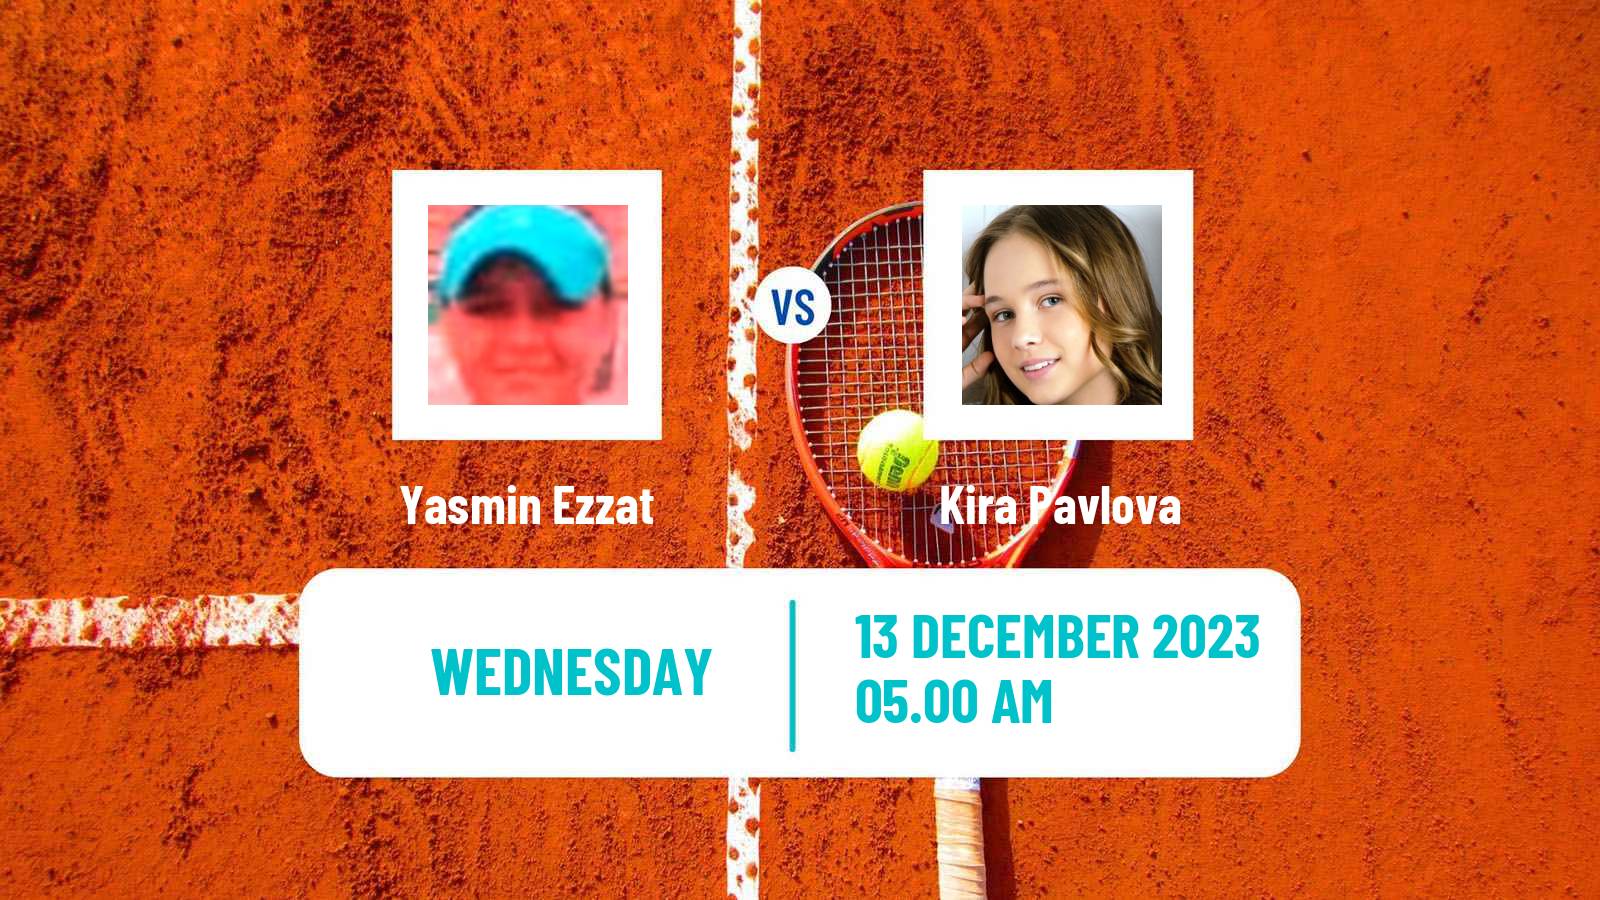 Tennis ITF W25 Sharm Elsheikh 6 Women 2023 Yasmin Ezzat - Kira Pavlova